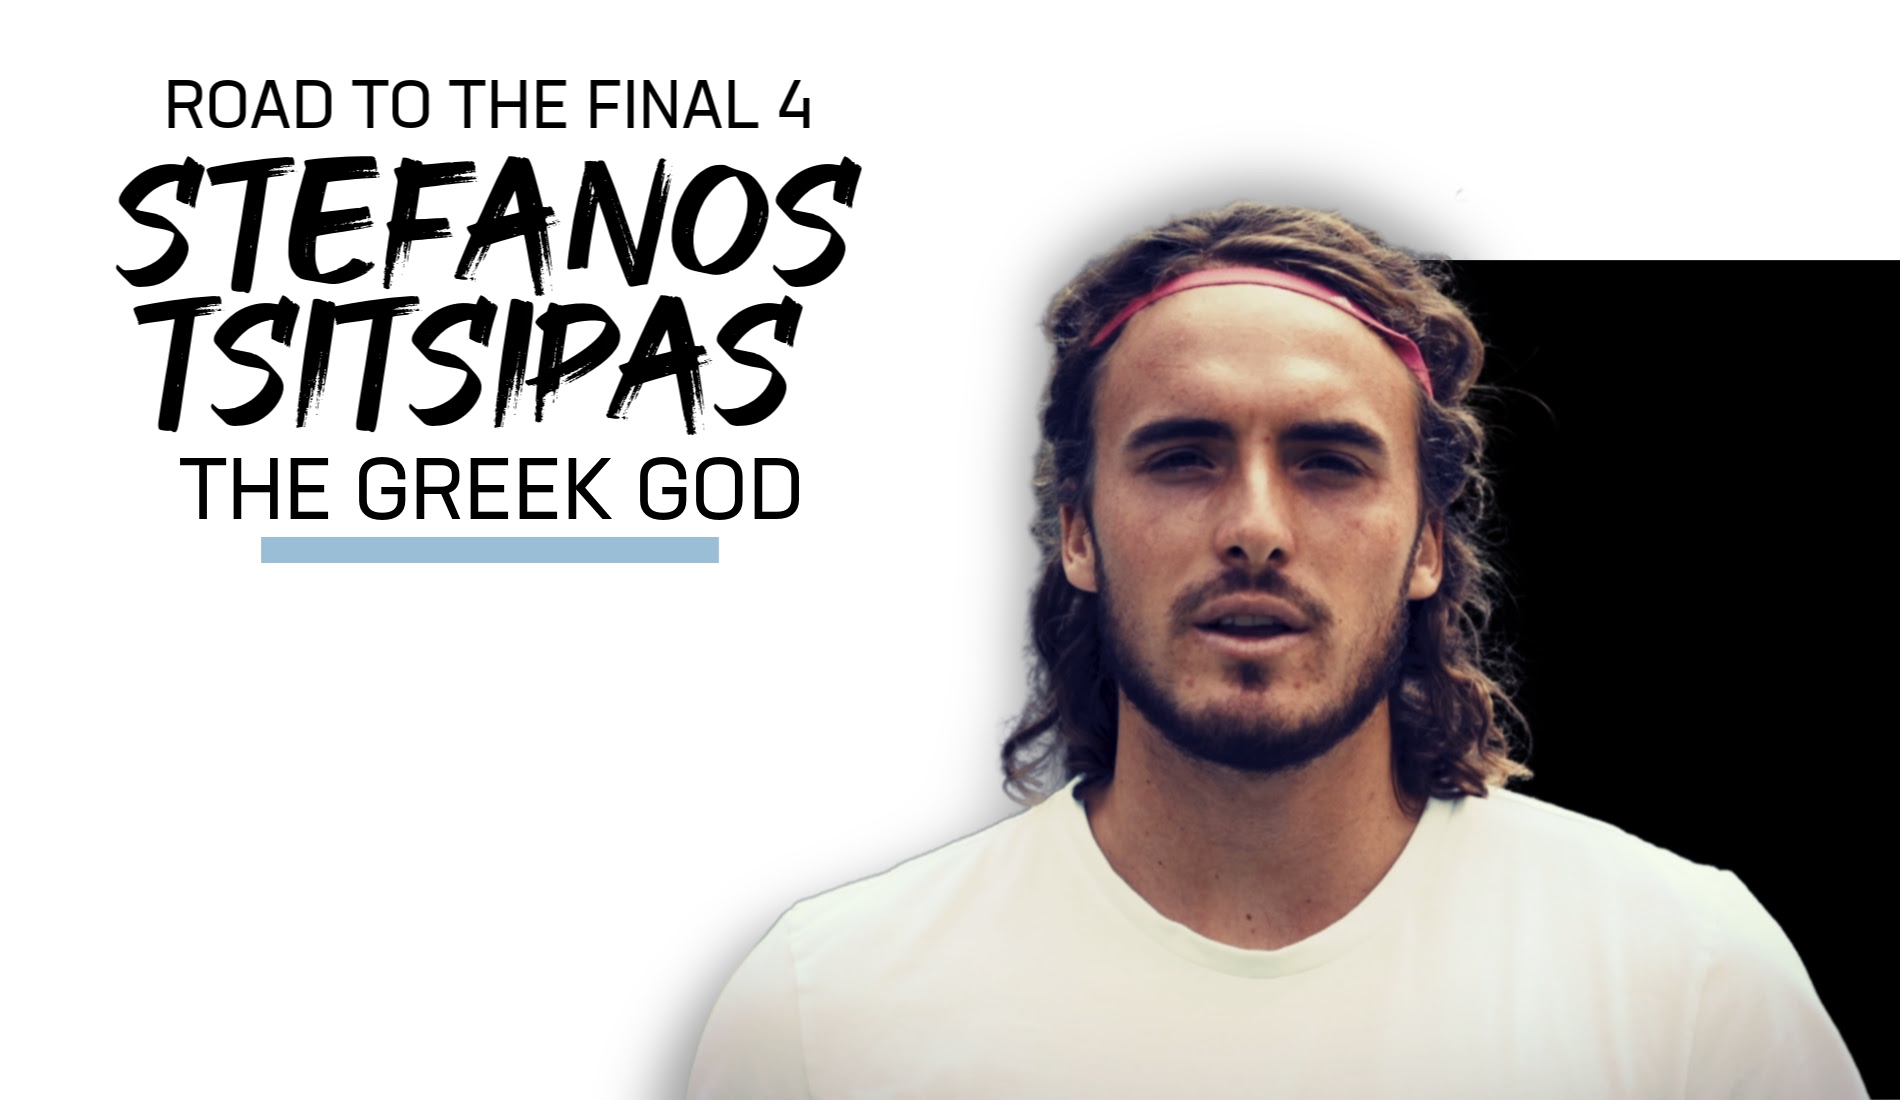 UTS - Road to the Final 4: Stefanos Tsitsipas